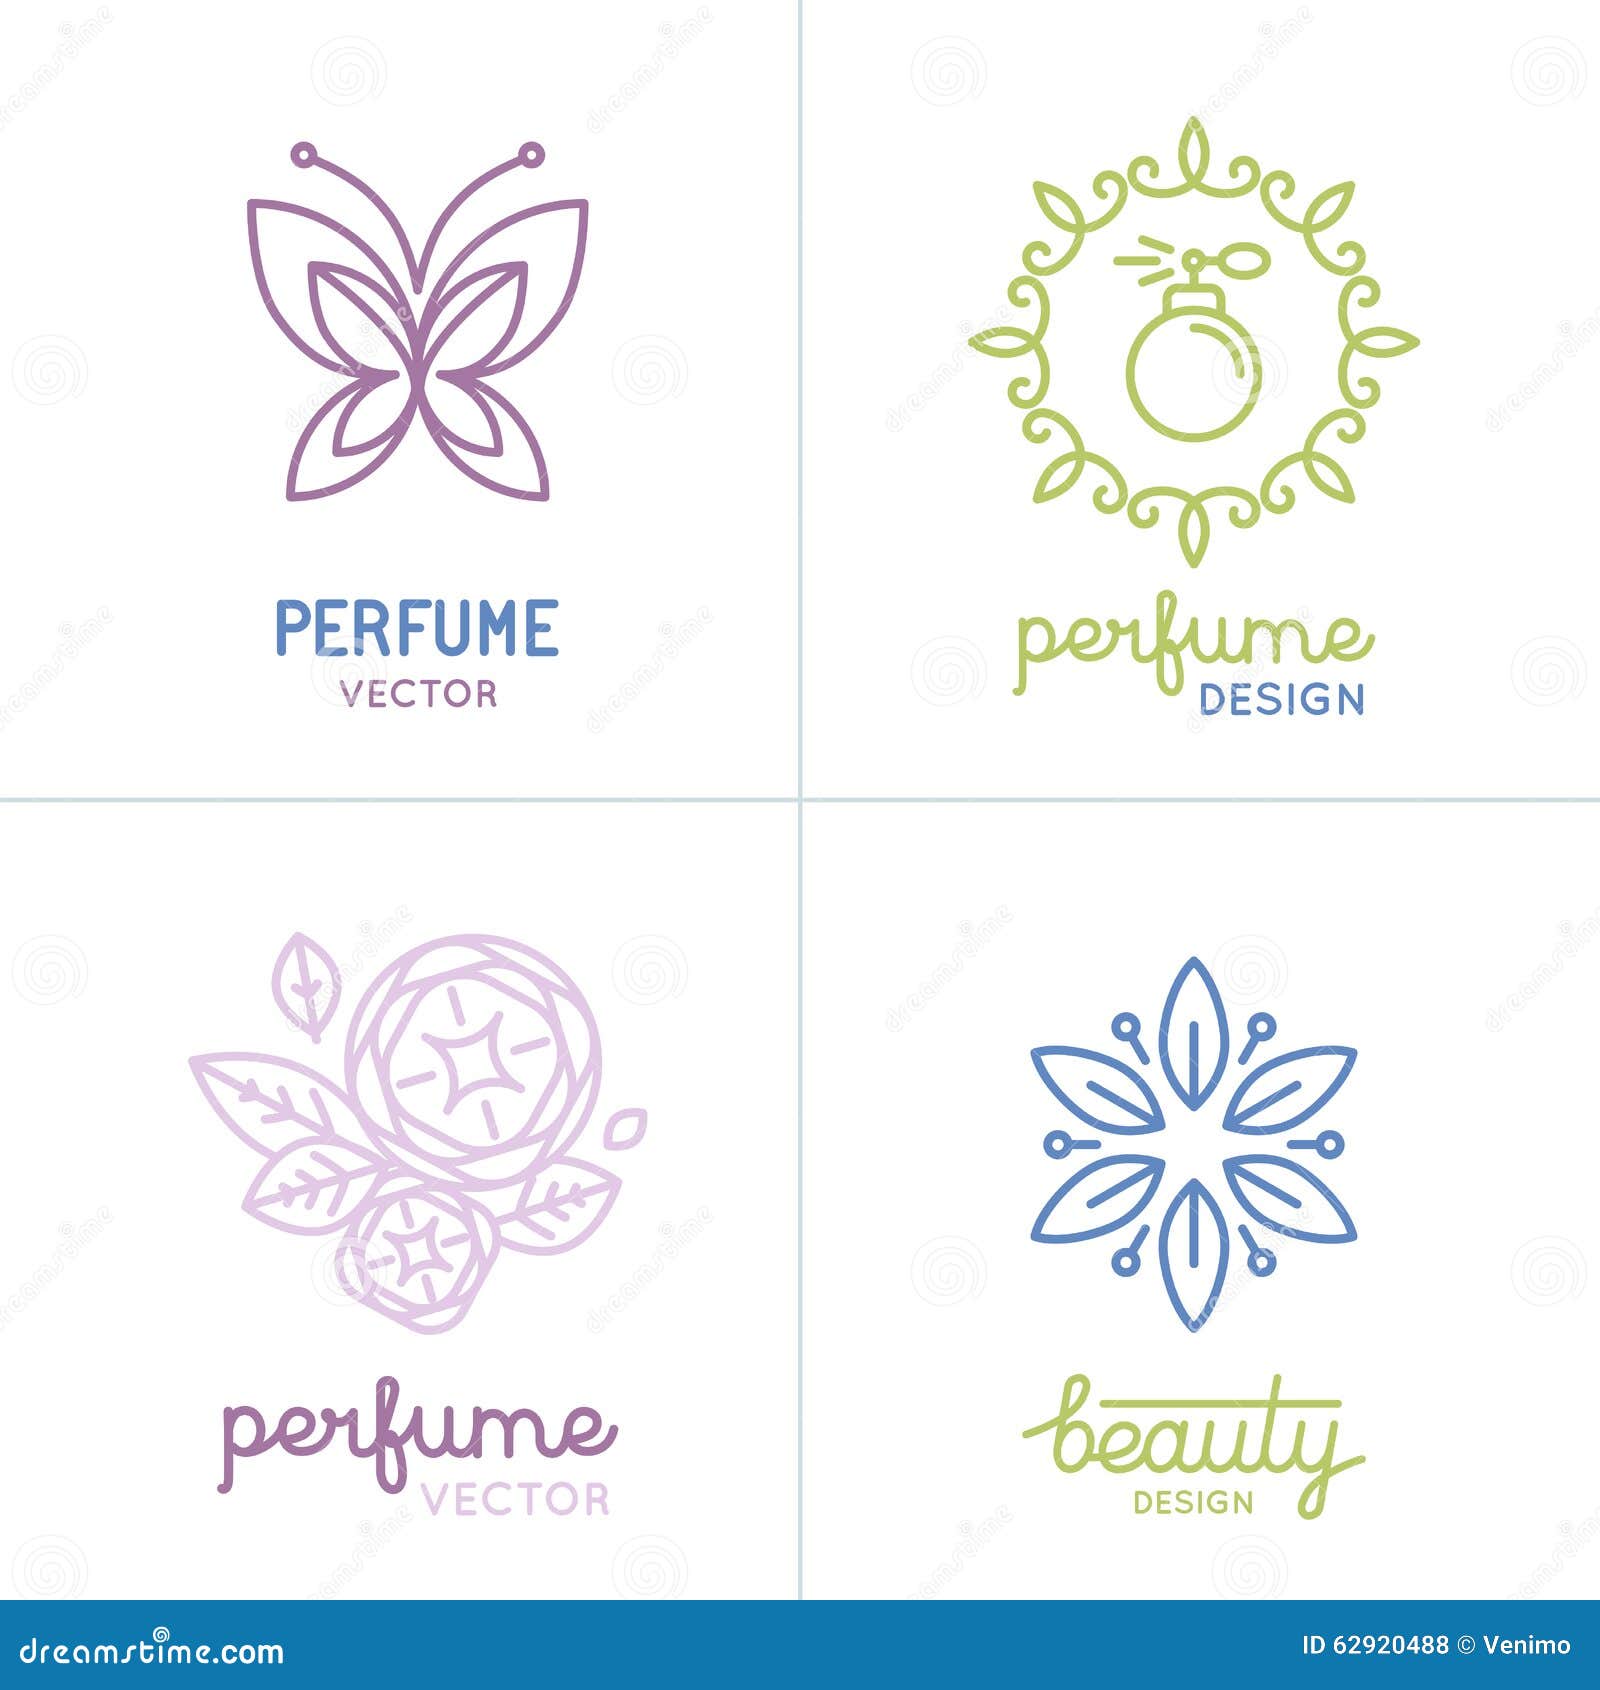 Premium Vector, Luxury perfume logo template concept